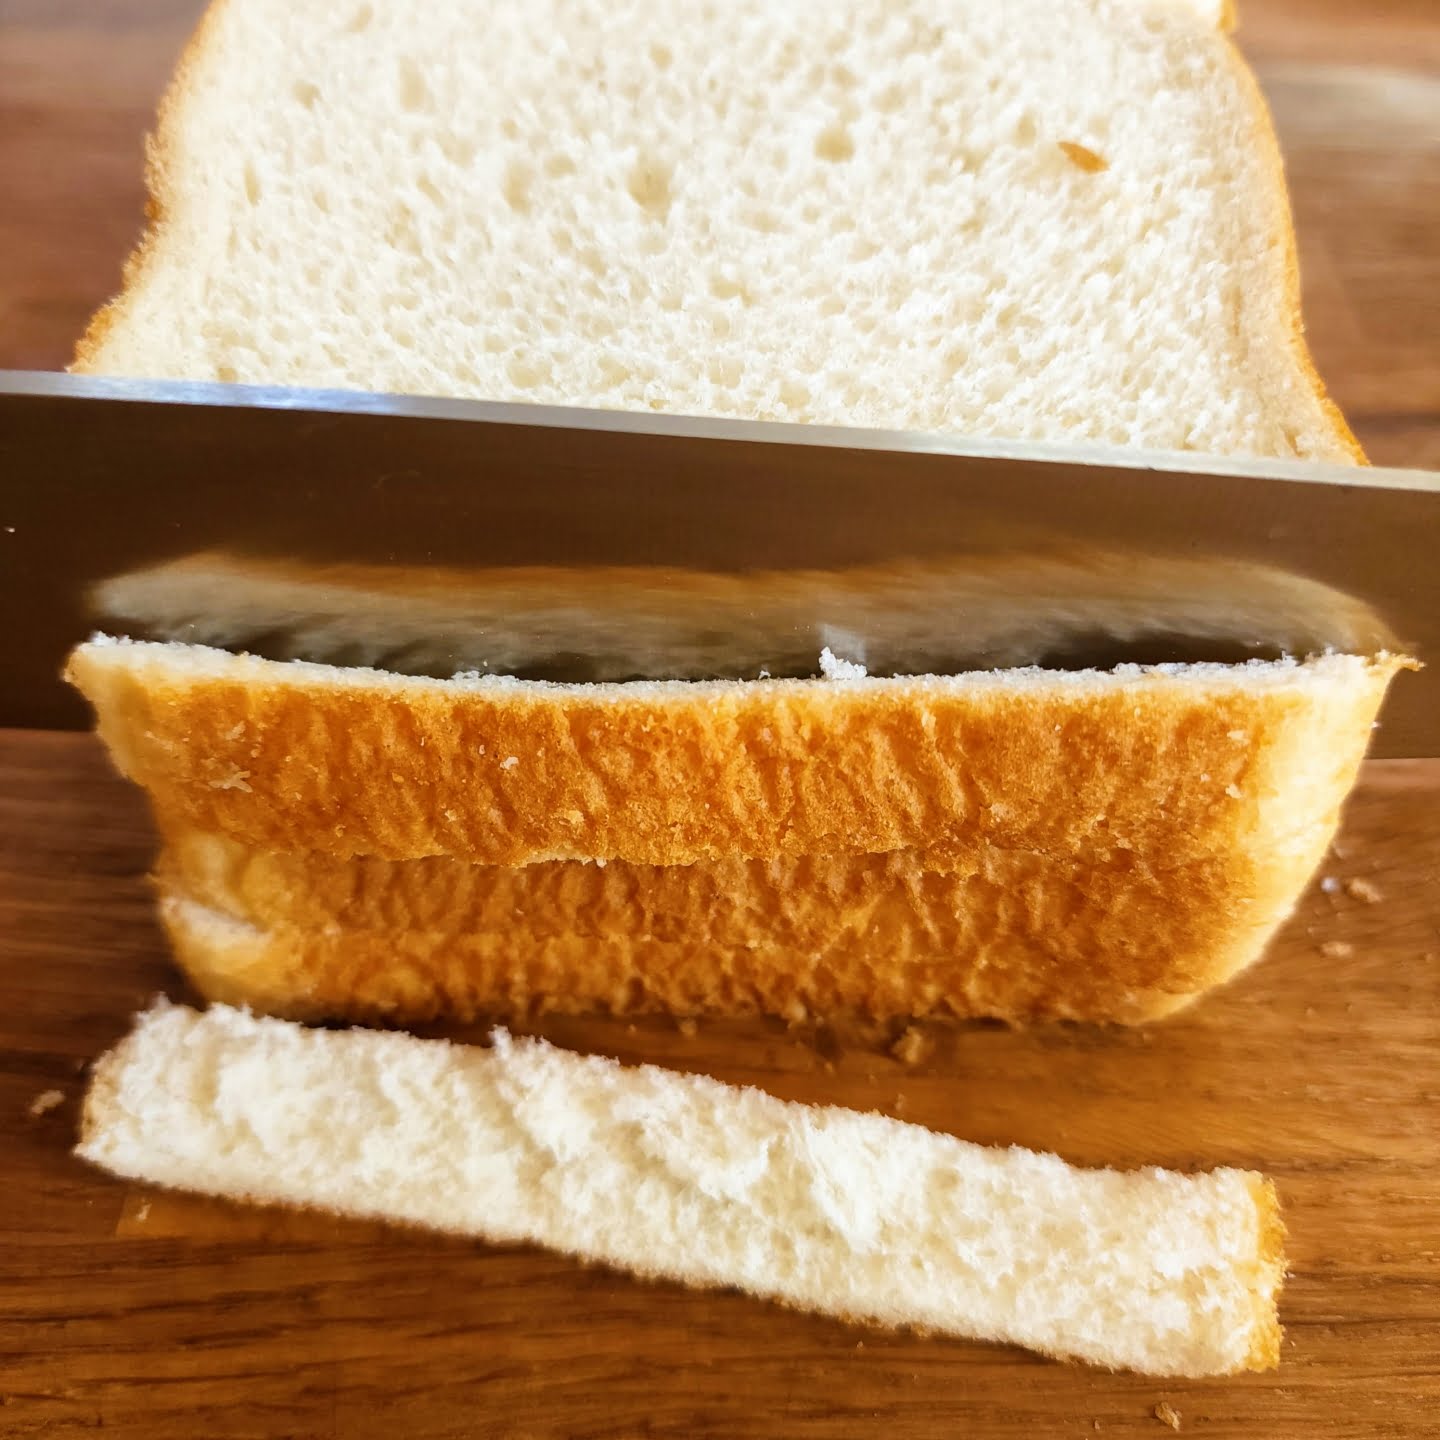 Cutting crust off the bread